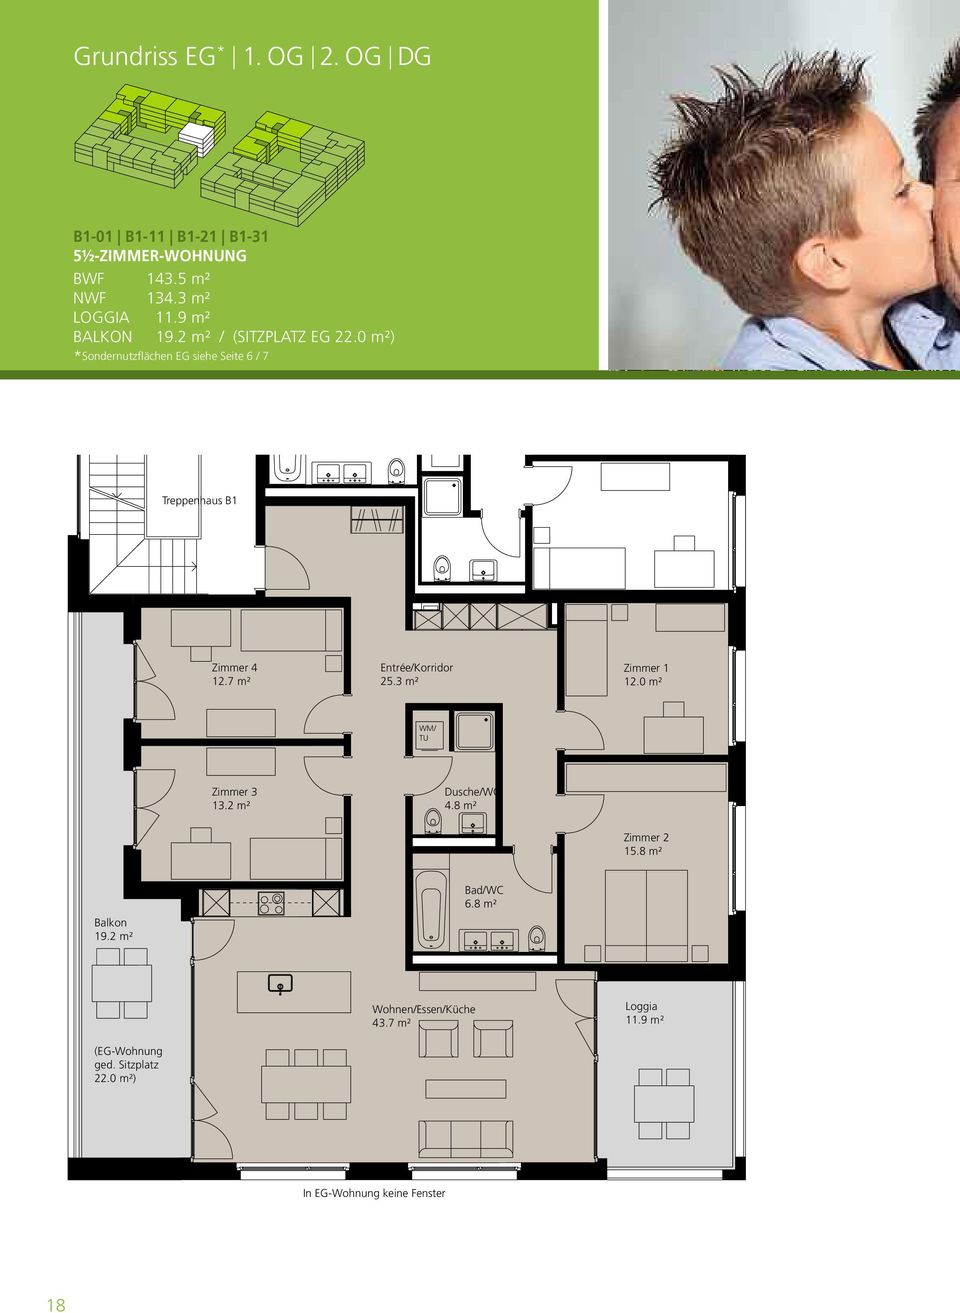 7 m² Entrée/Korridor 25.3 m² Zimmer 1 12.0 m² WM/ TU Zimmer 3 13.2 m² Dusche/WC 4.8 m² Zimmer 2 15.8 m² Balkon 19.